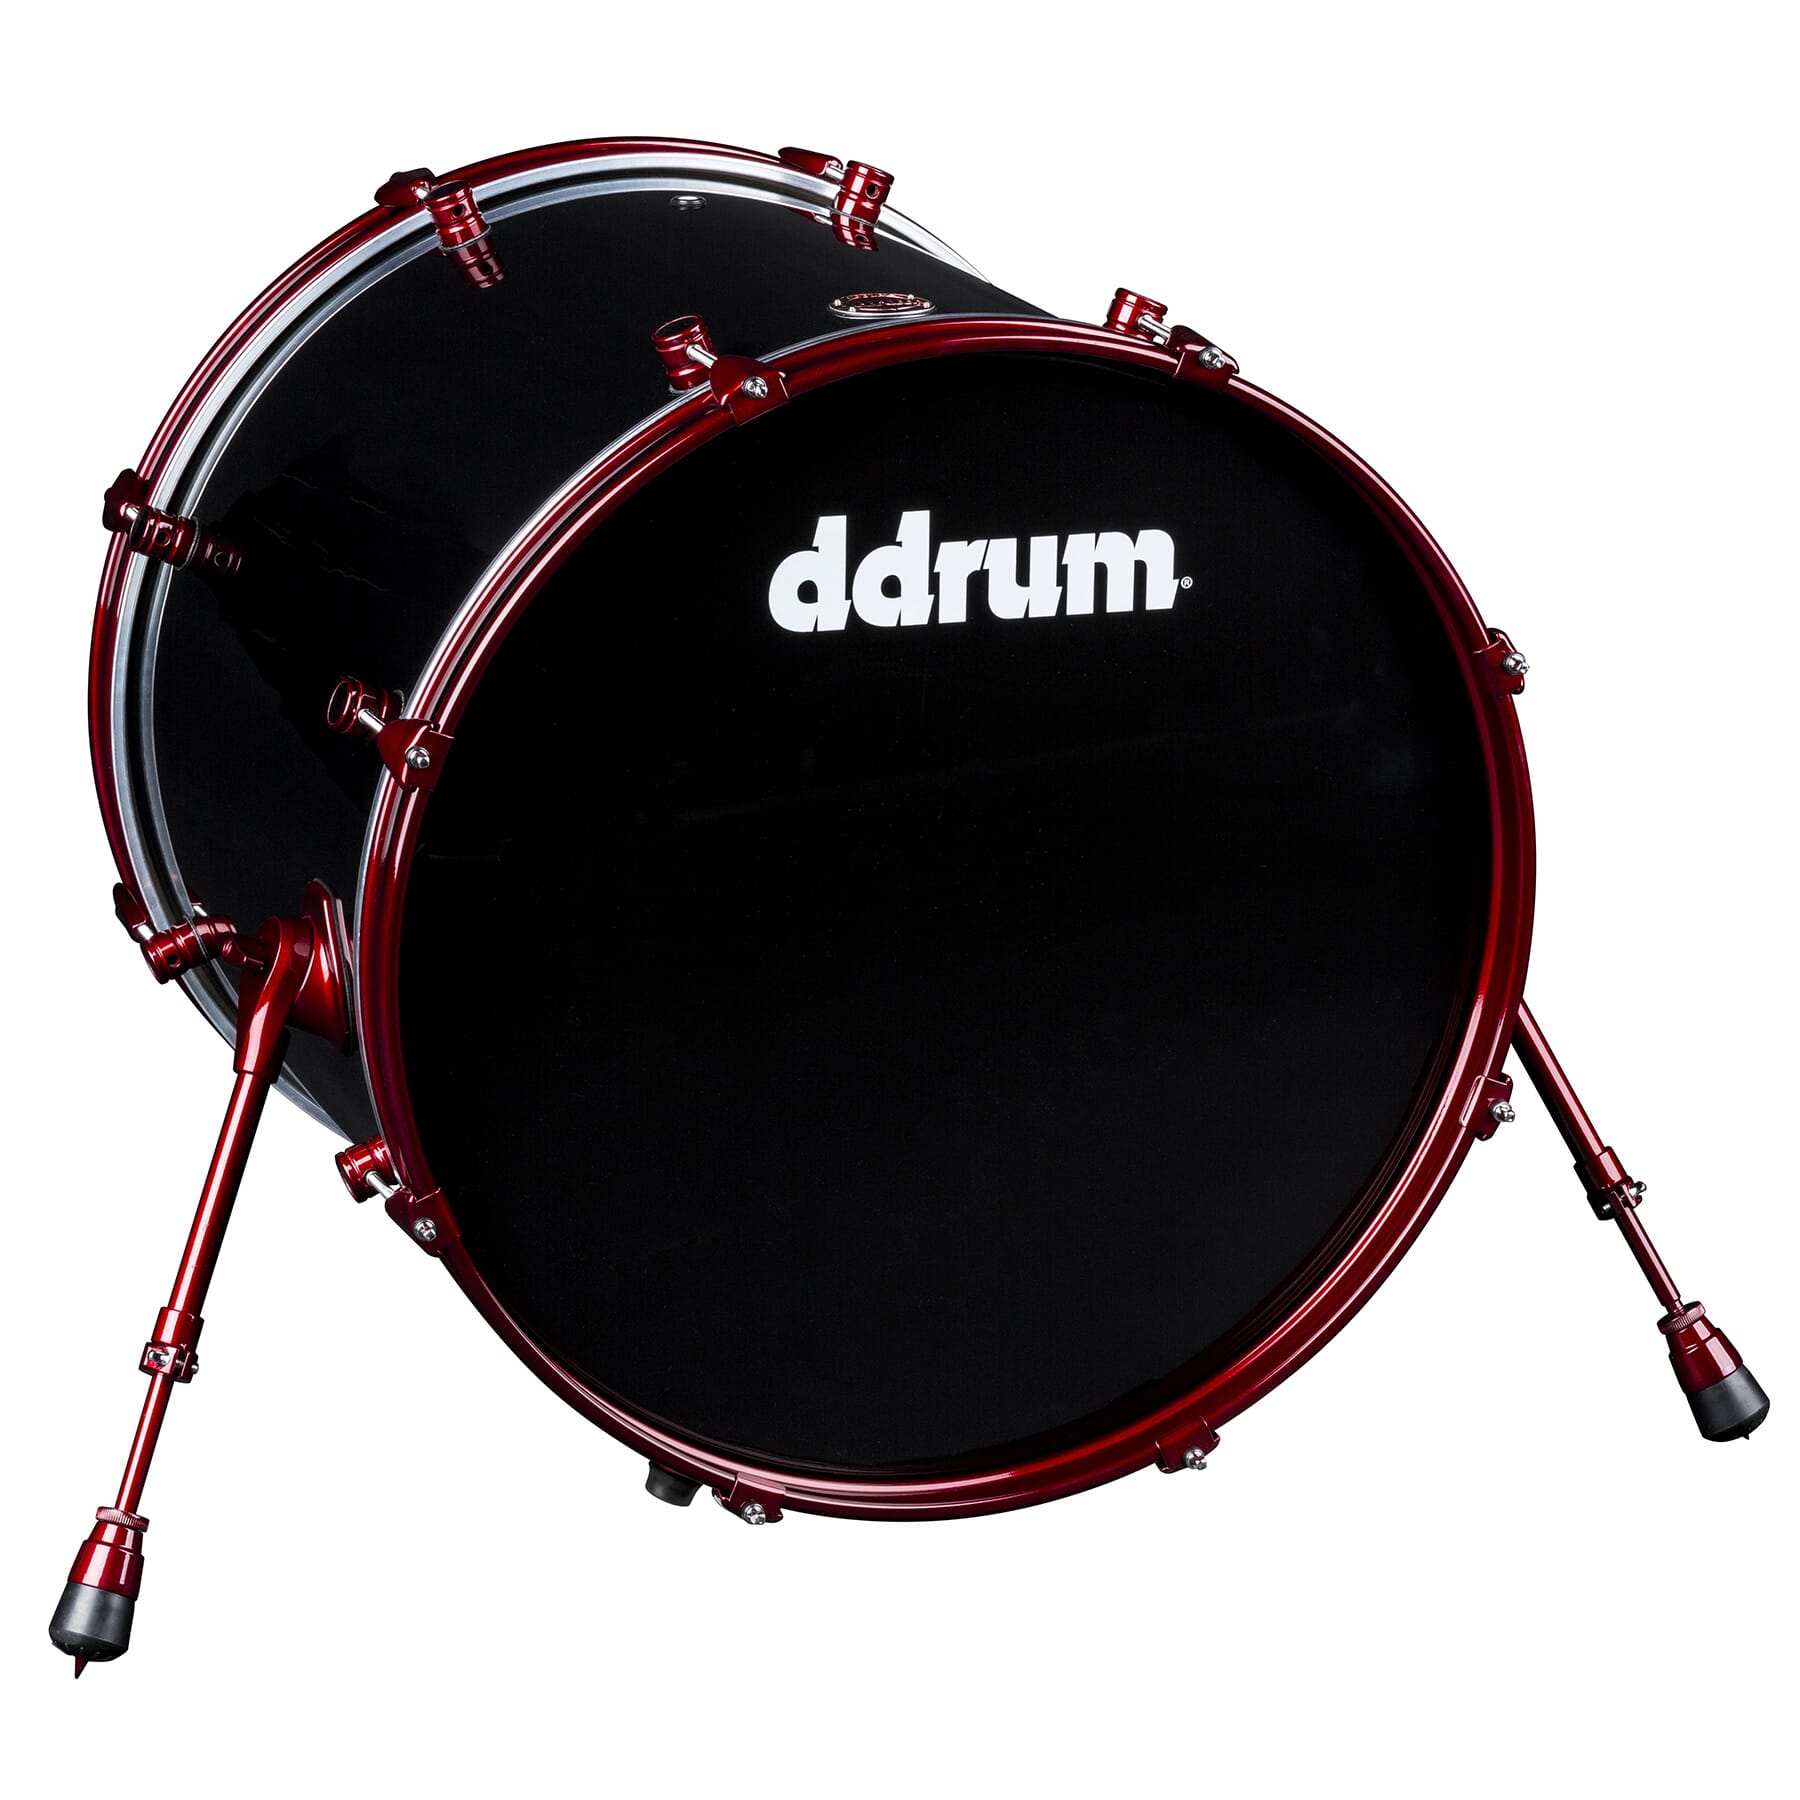 Reflex Series Bass drum 20x22 Black wrap with red hardware